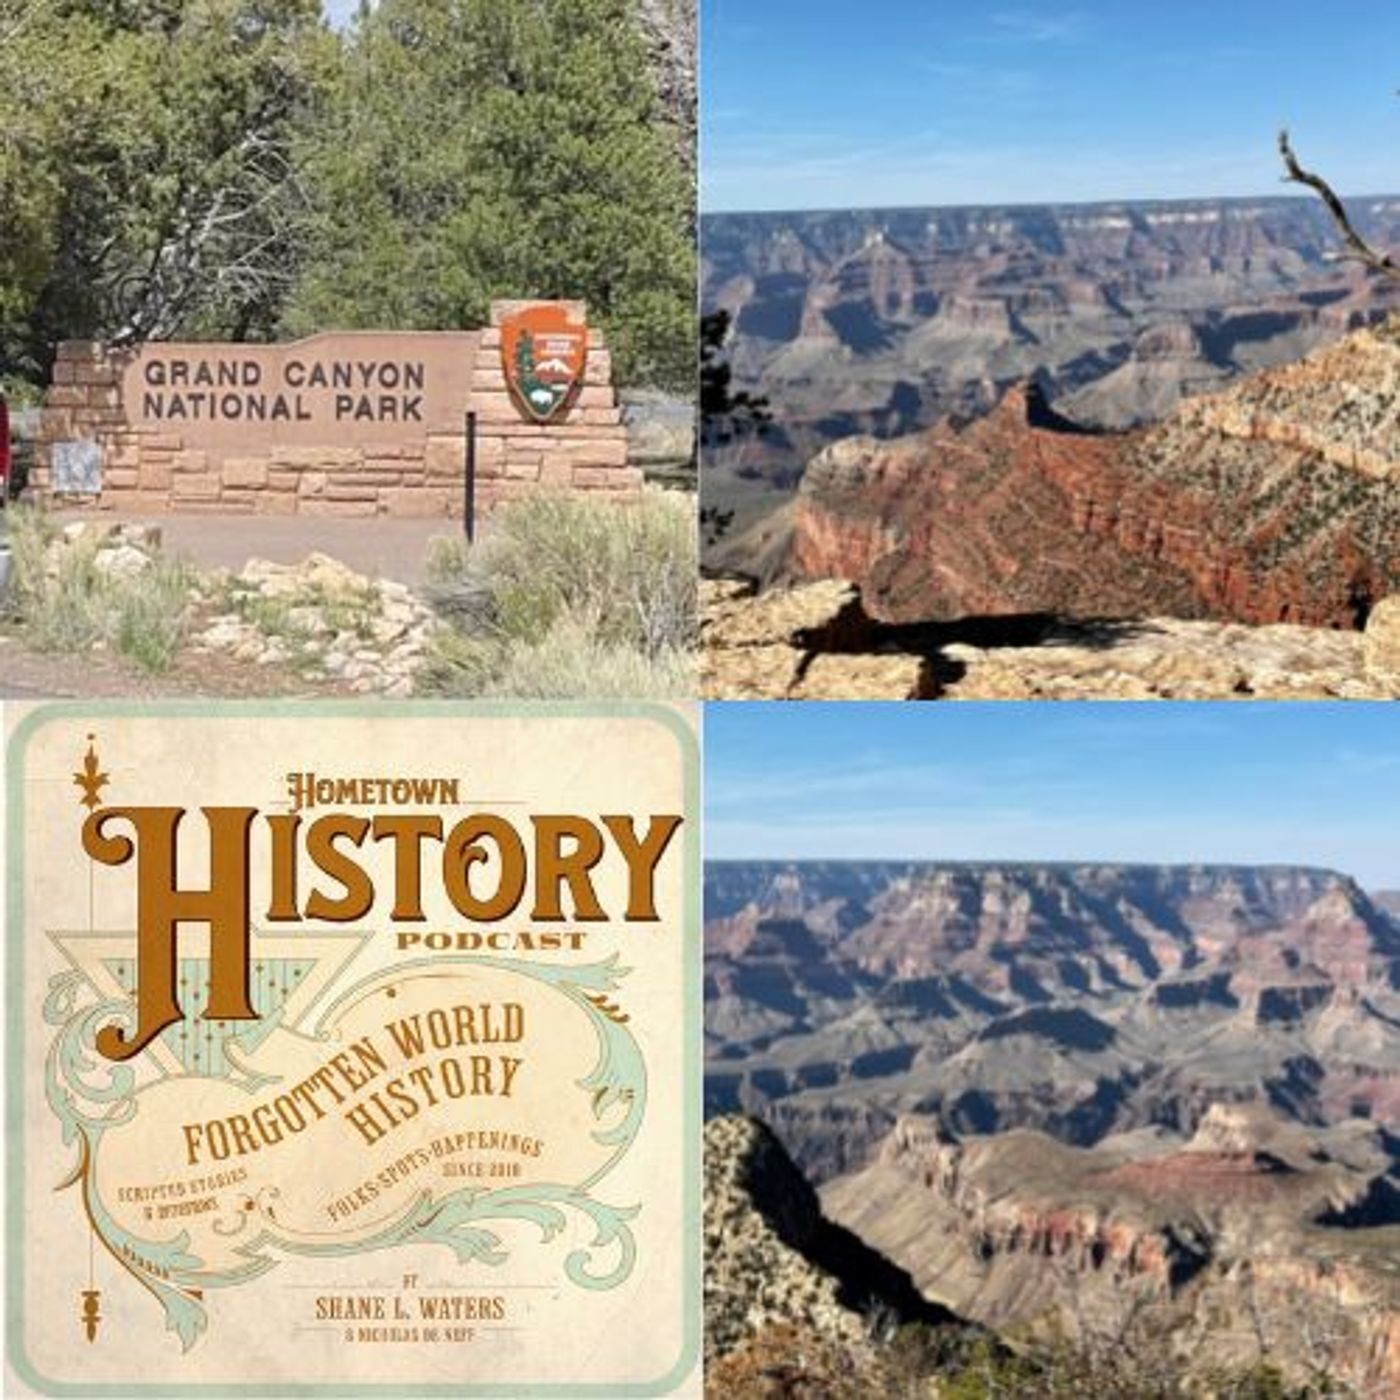 80: Grand Canyon National Park Image